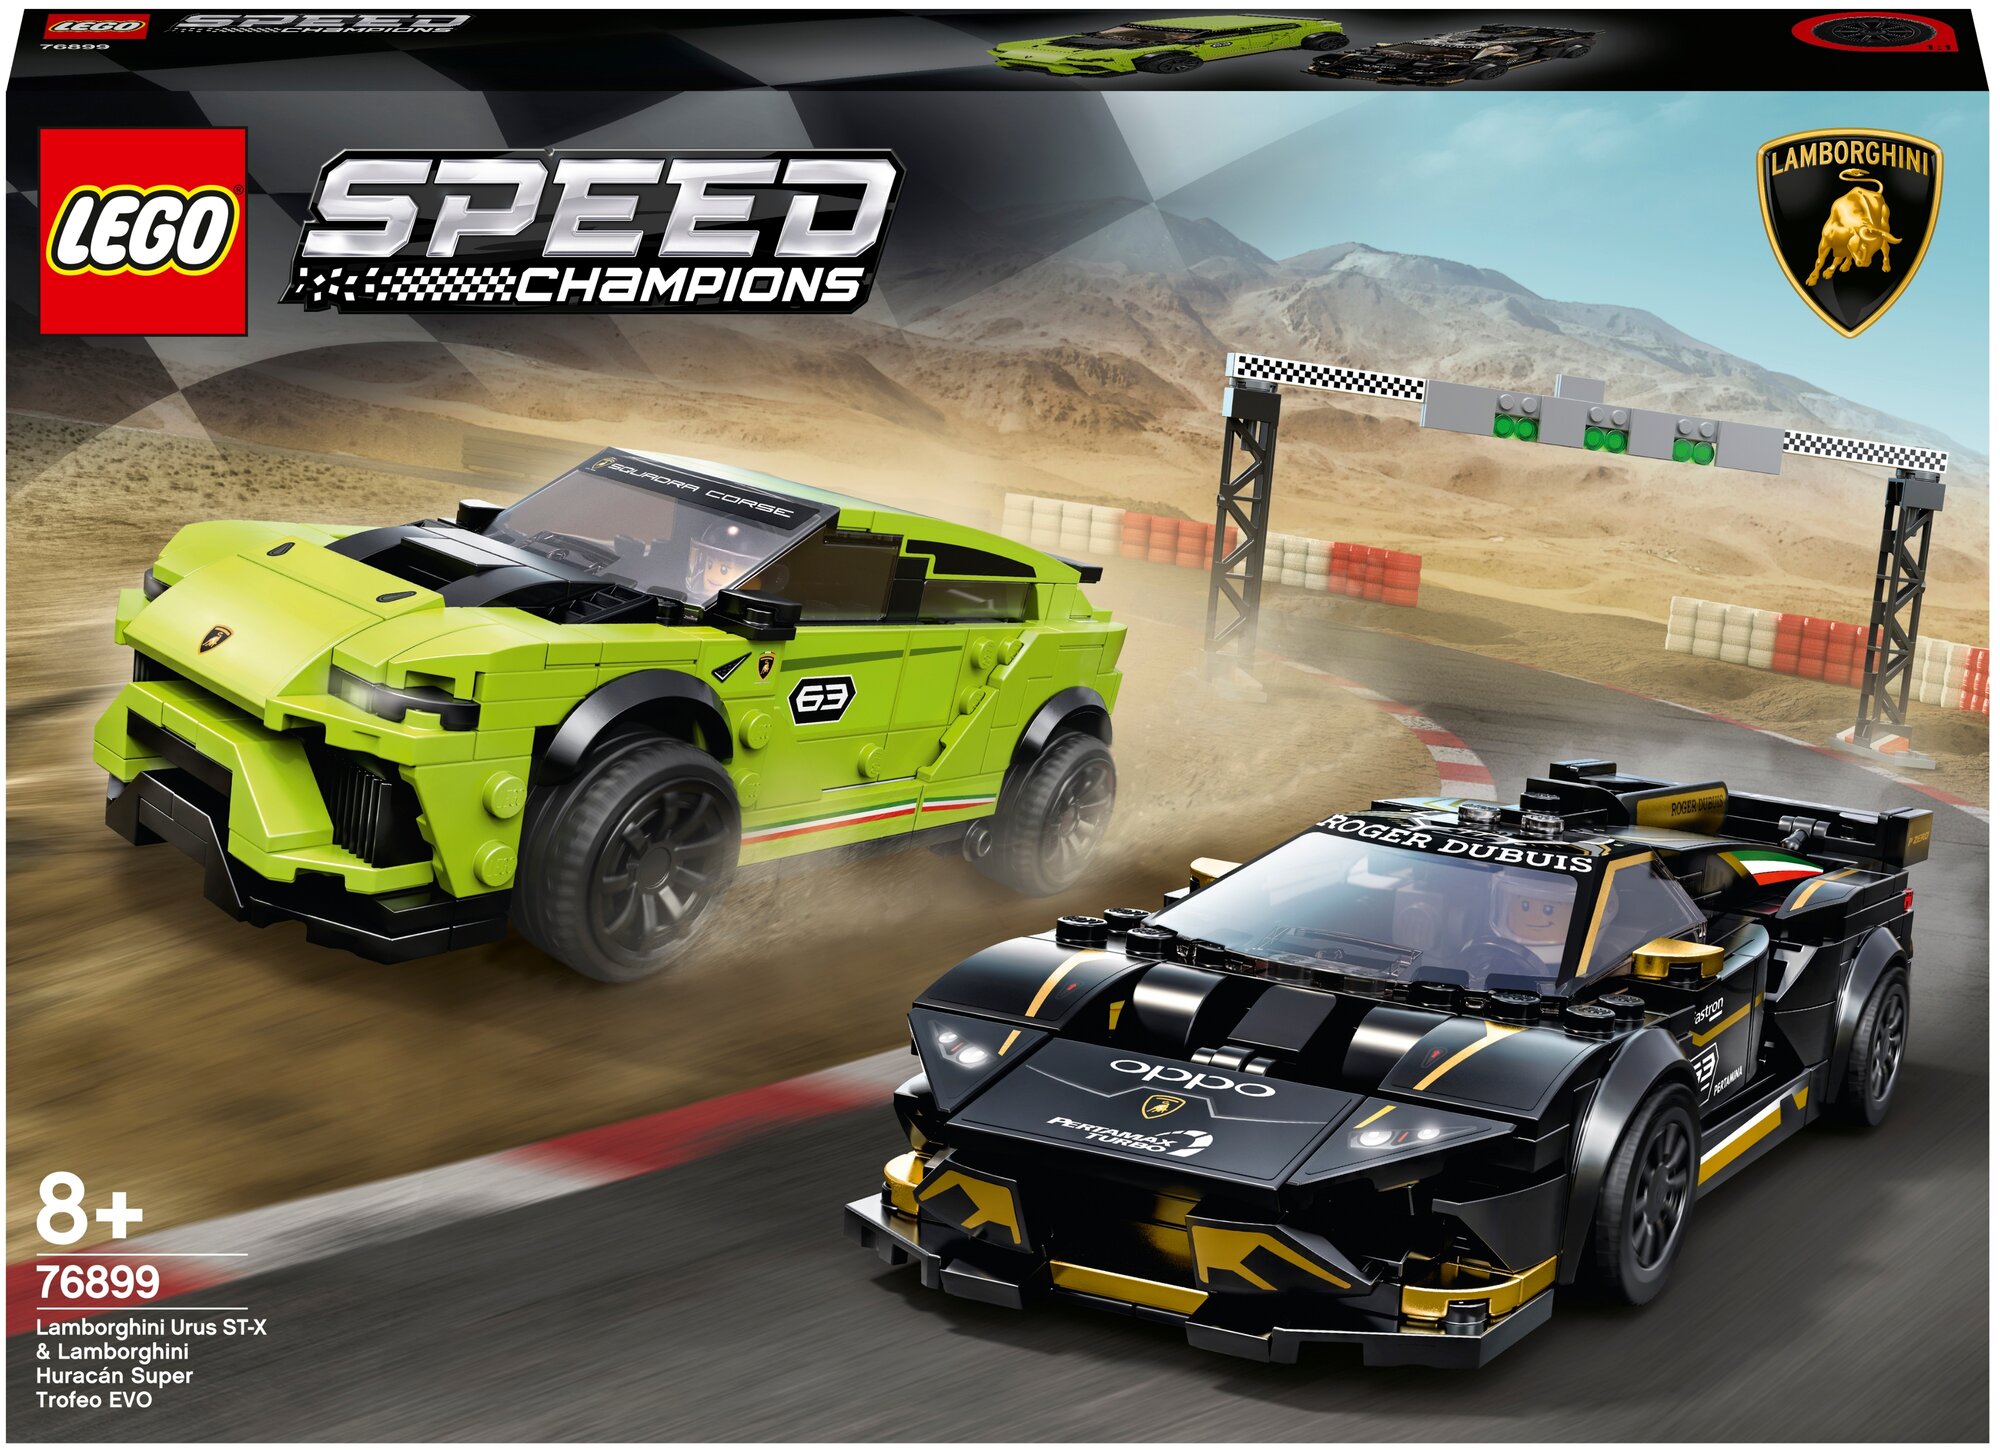 LEGO Speed Champions 76899 Lamborghini Urus ST-X and Lamborghini Huracan Super Trofeo EVO